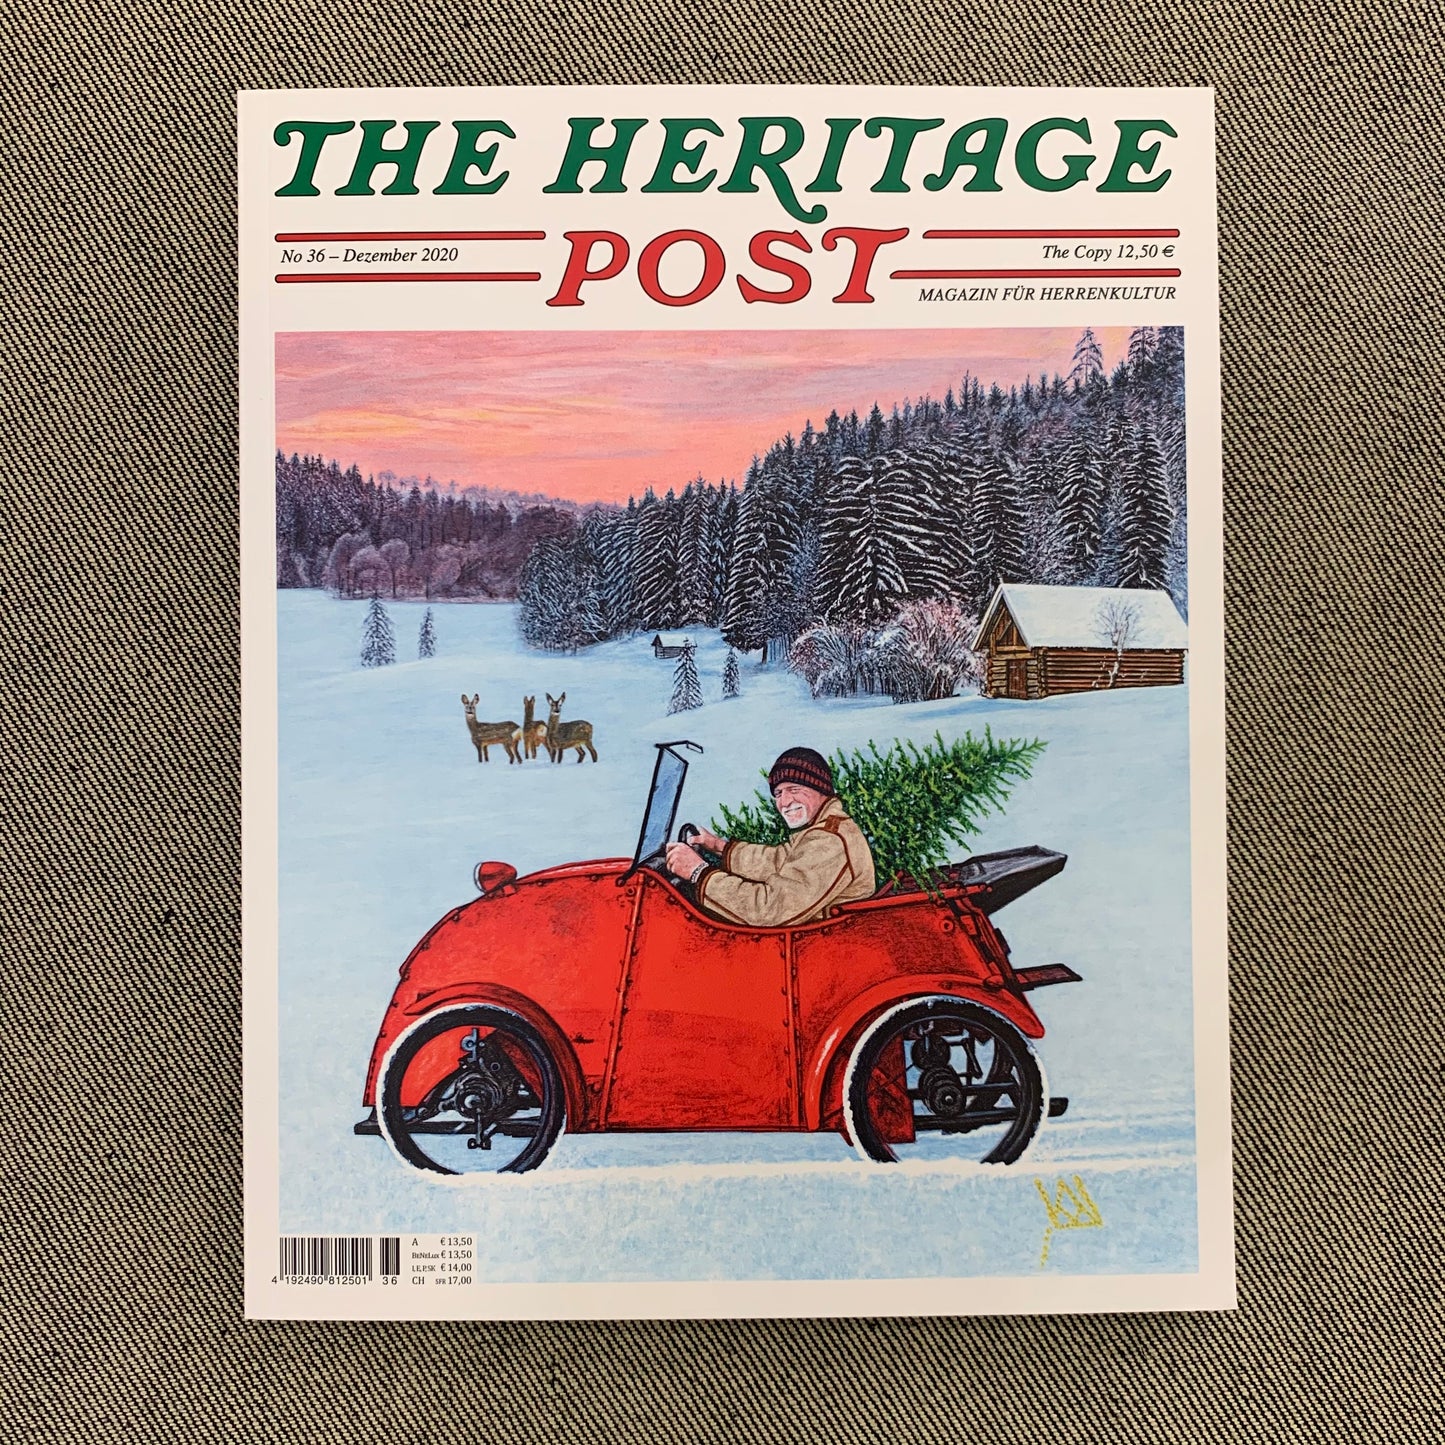 The Heritage Post - vol 36